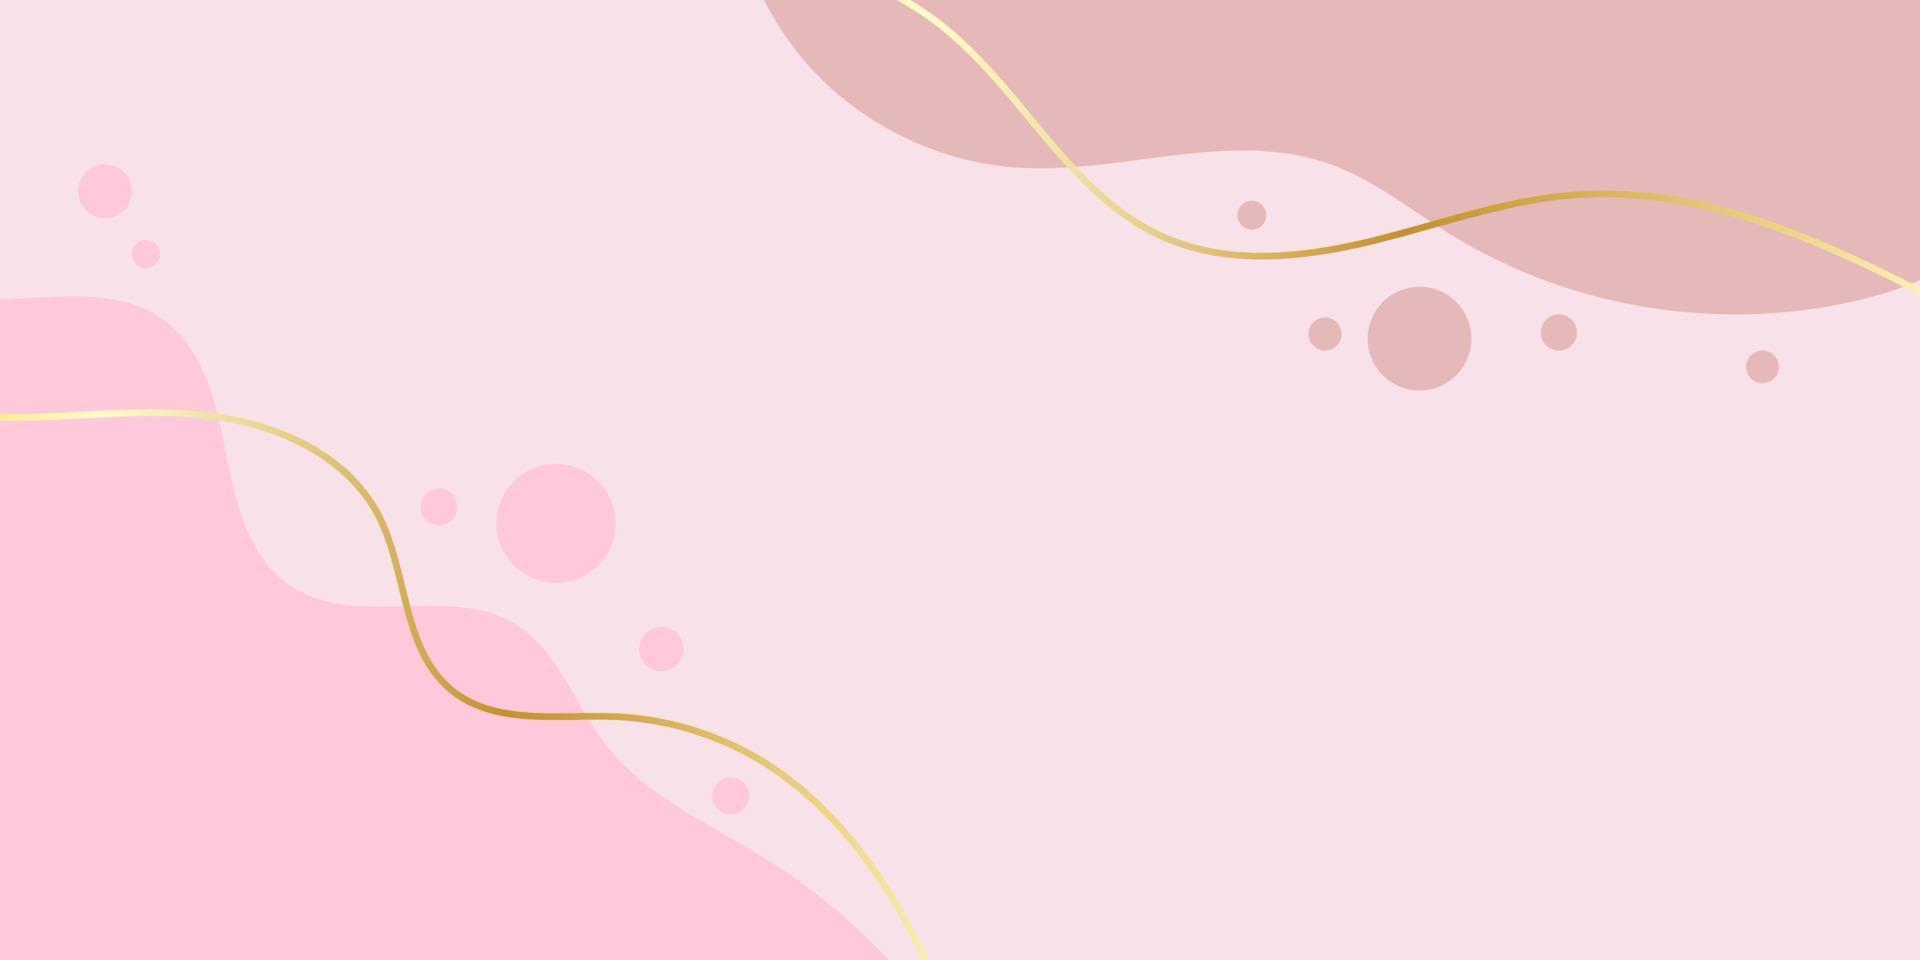 abstrakt modern bakgrund. rosa Vinka med guld gradienter rader. trendig baner. vektor illustration.